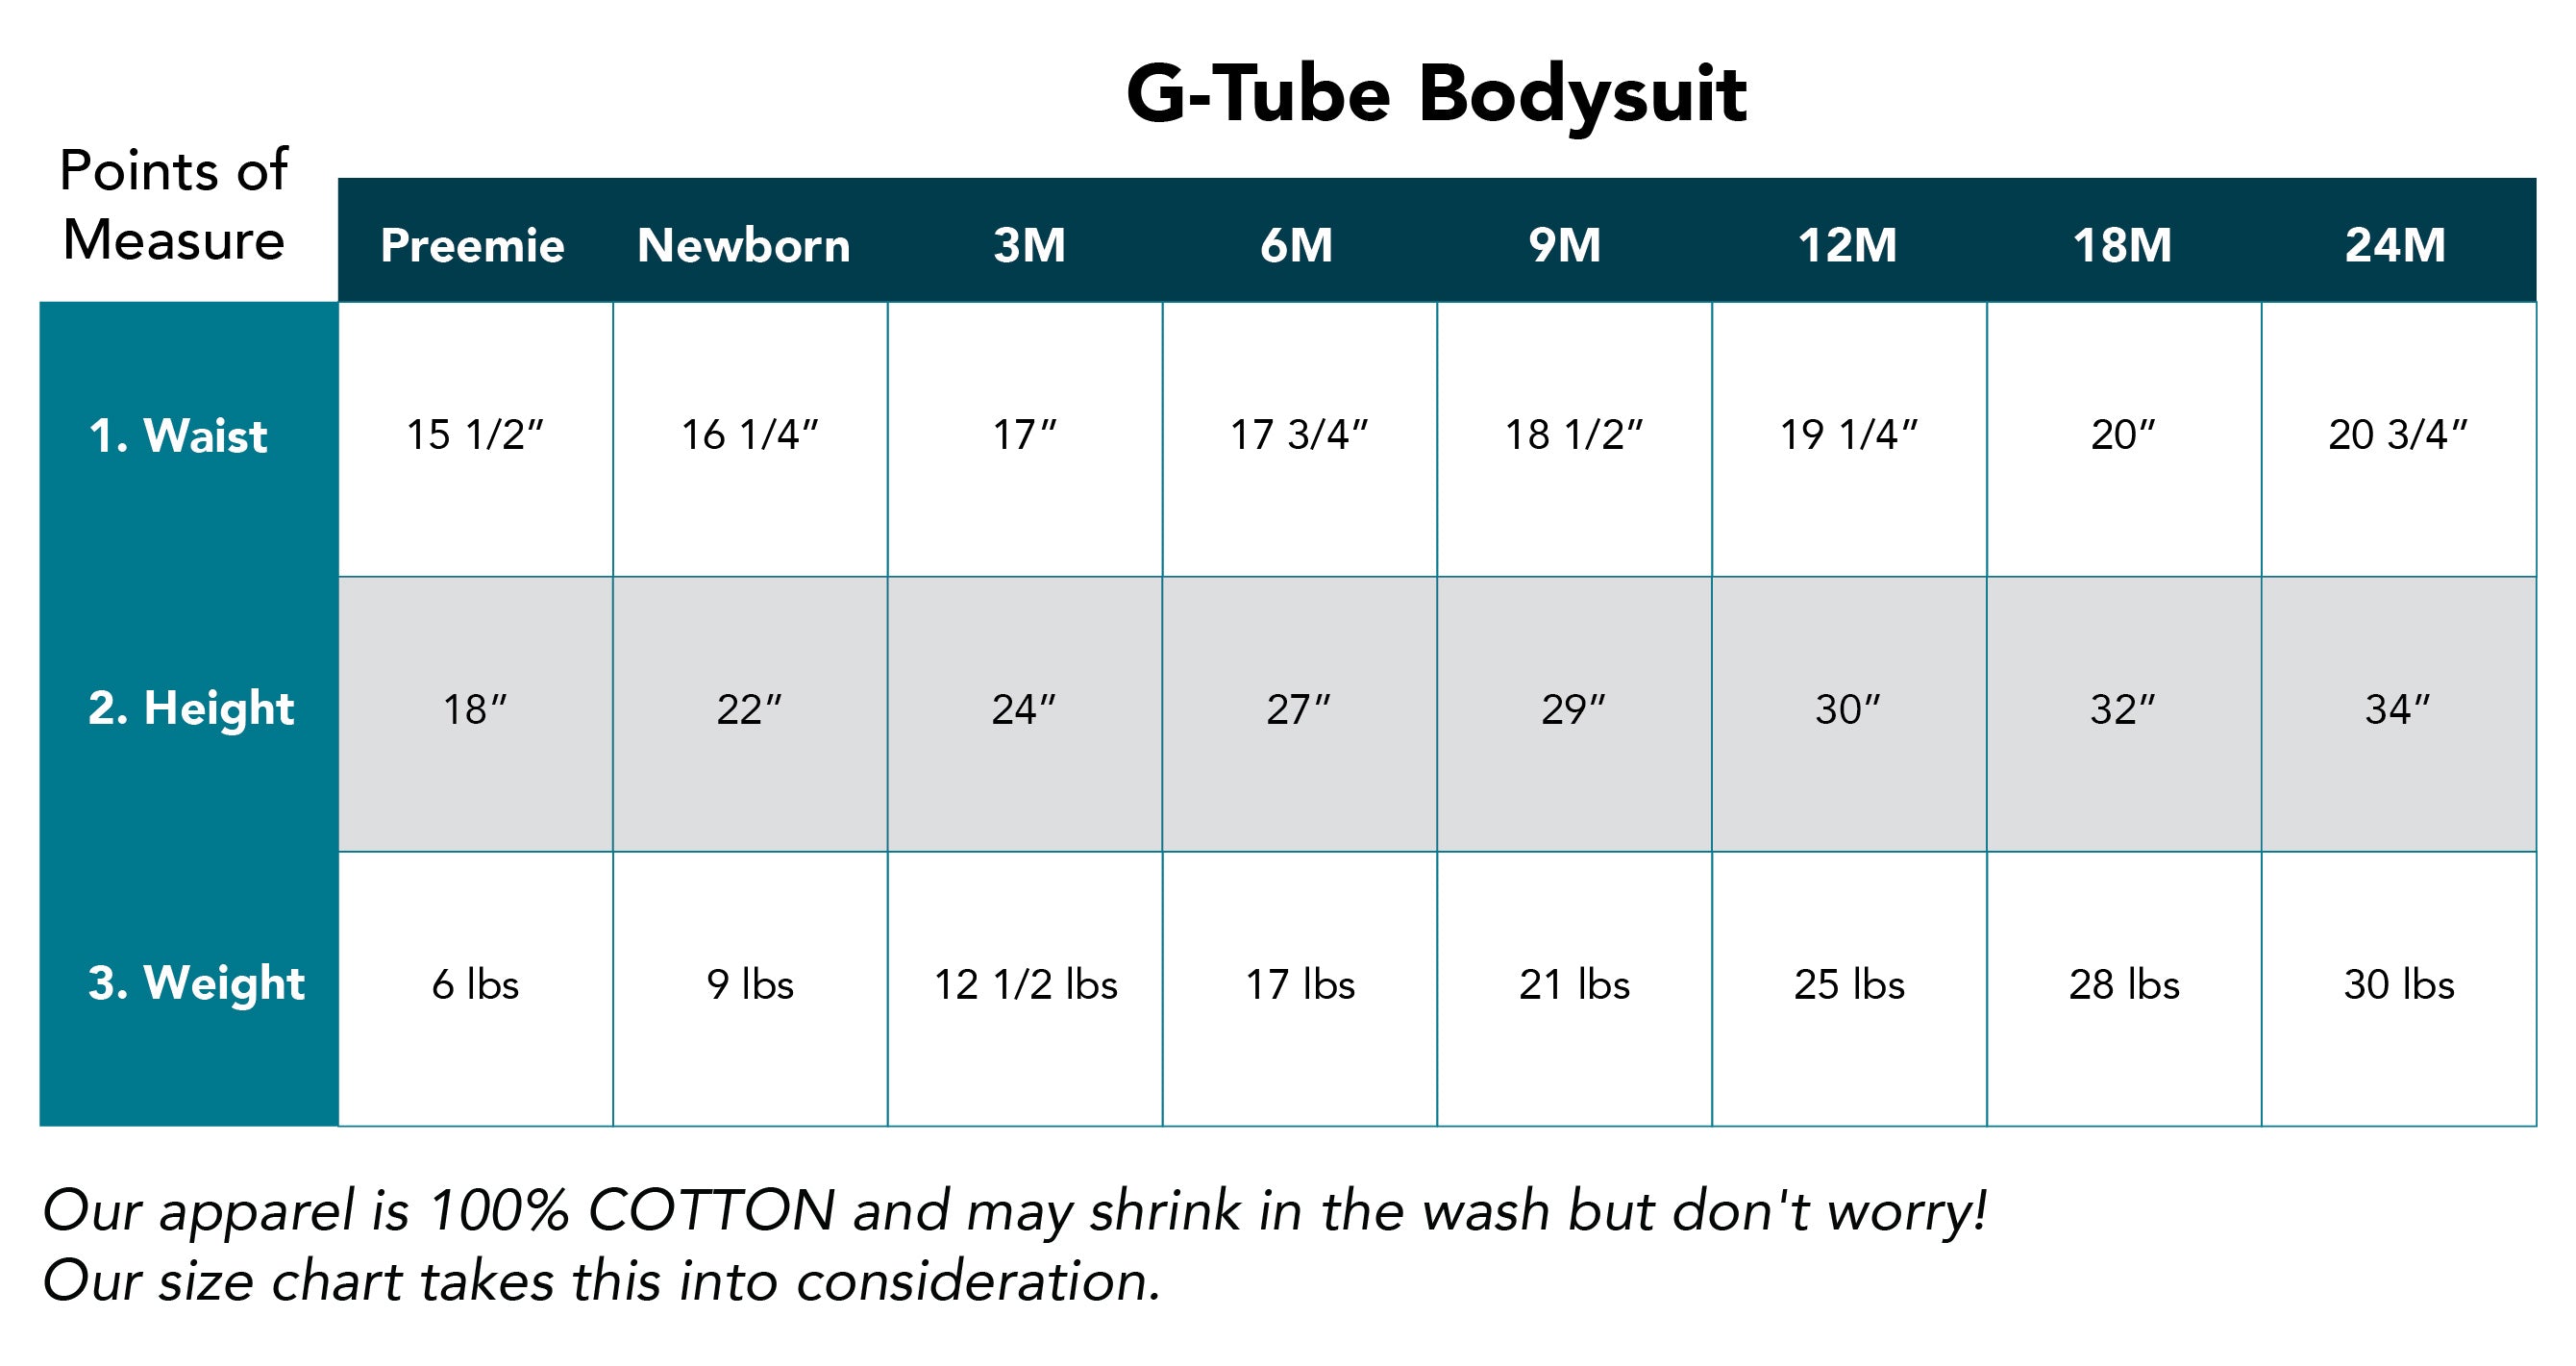 Salmon Stripe Short-Sleeve G-Tube Bodysuit | Preemie to 24M | G-Tube, Catheter, NICU/PICU, Port-friendly adaptive clothing